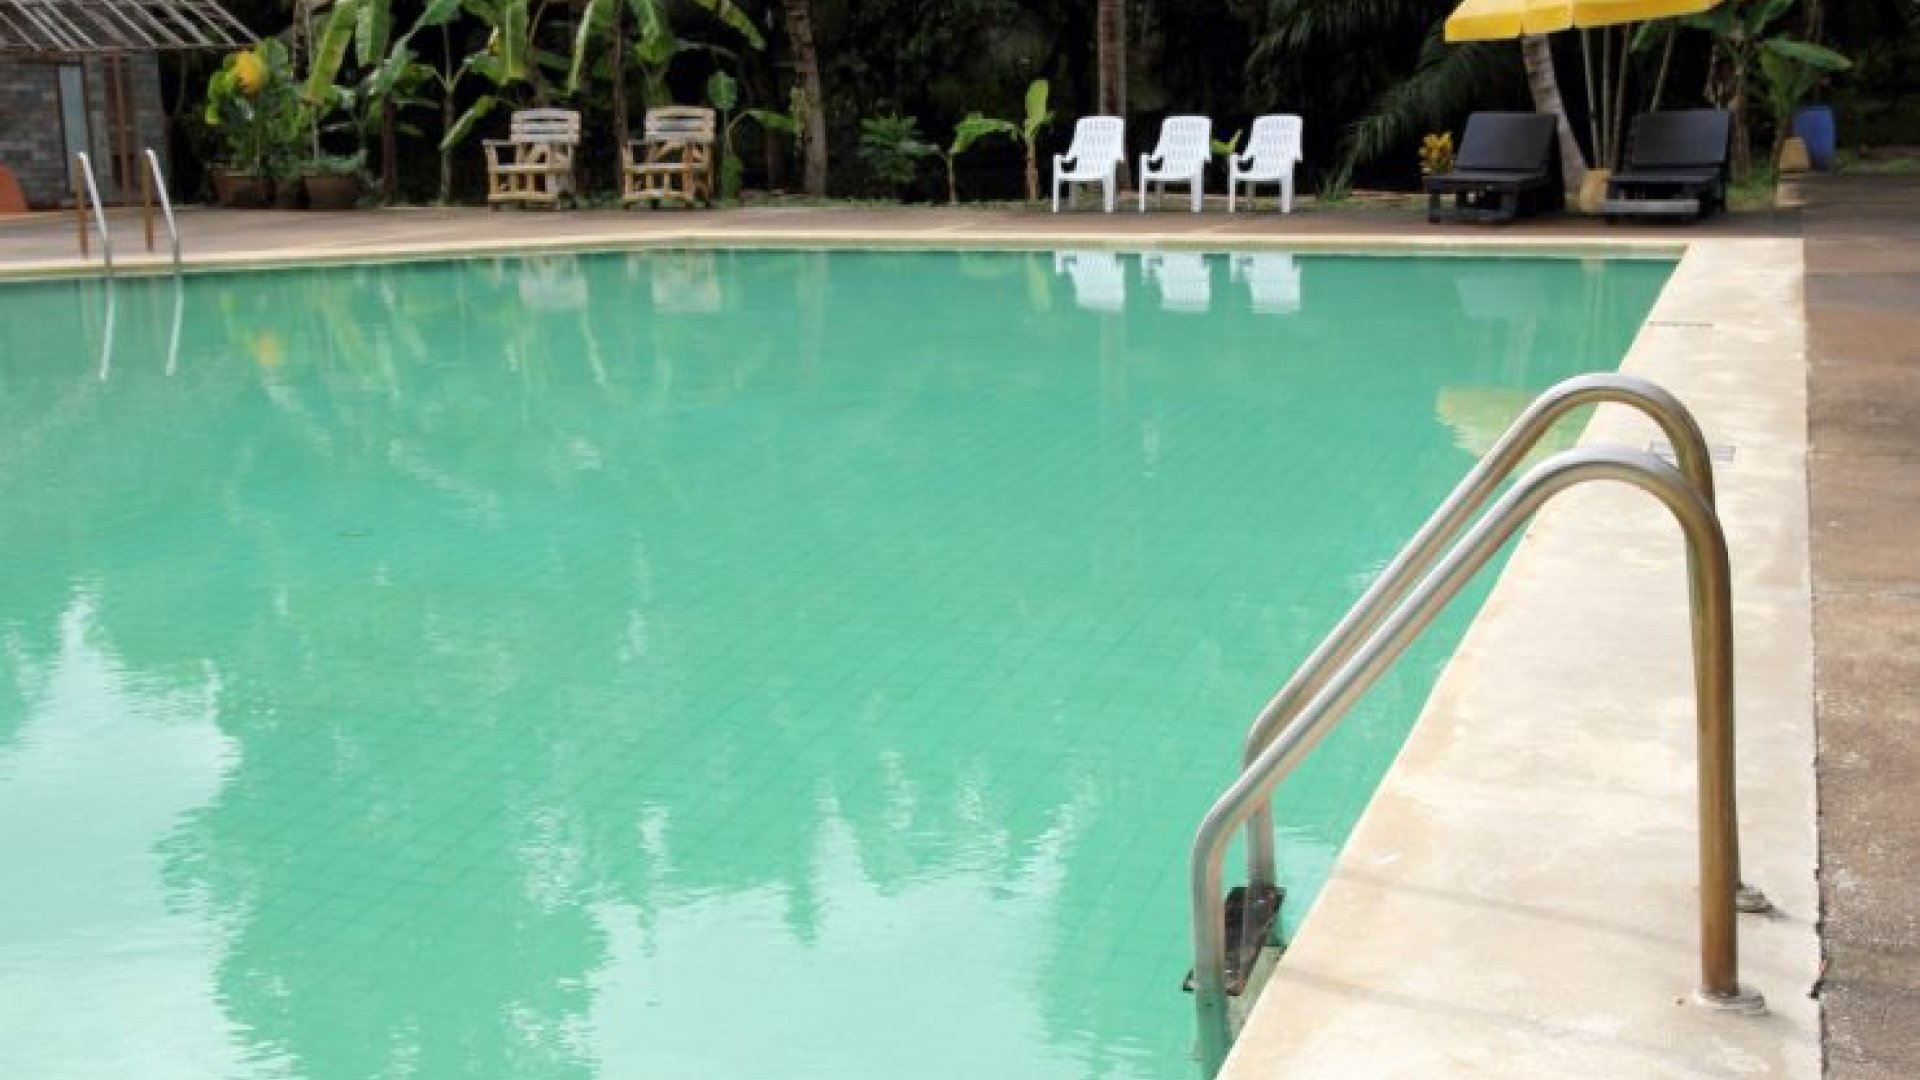 agua de la piscina de color verde